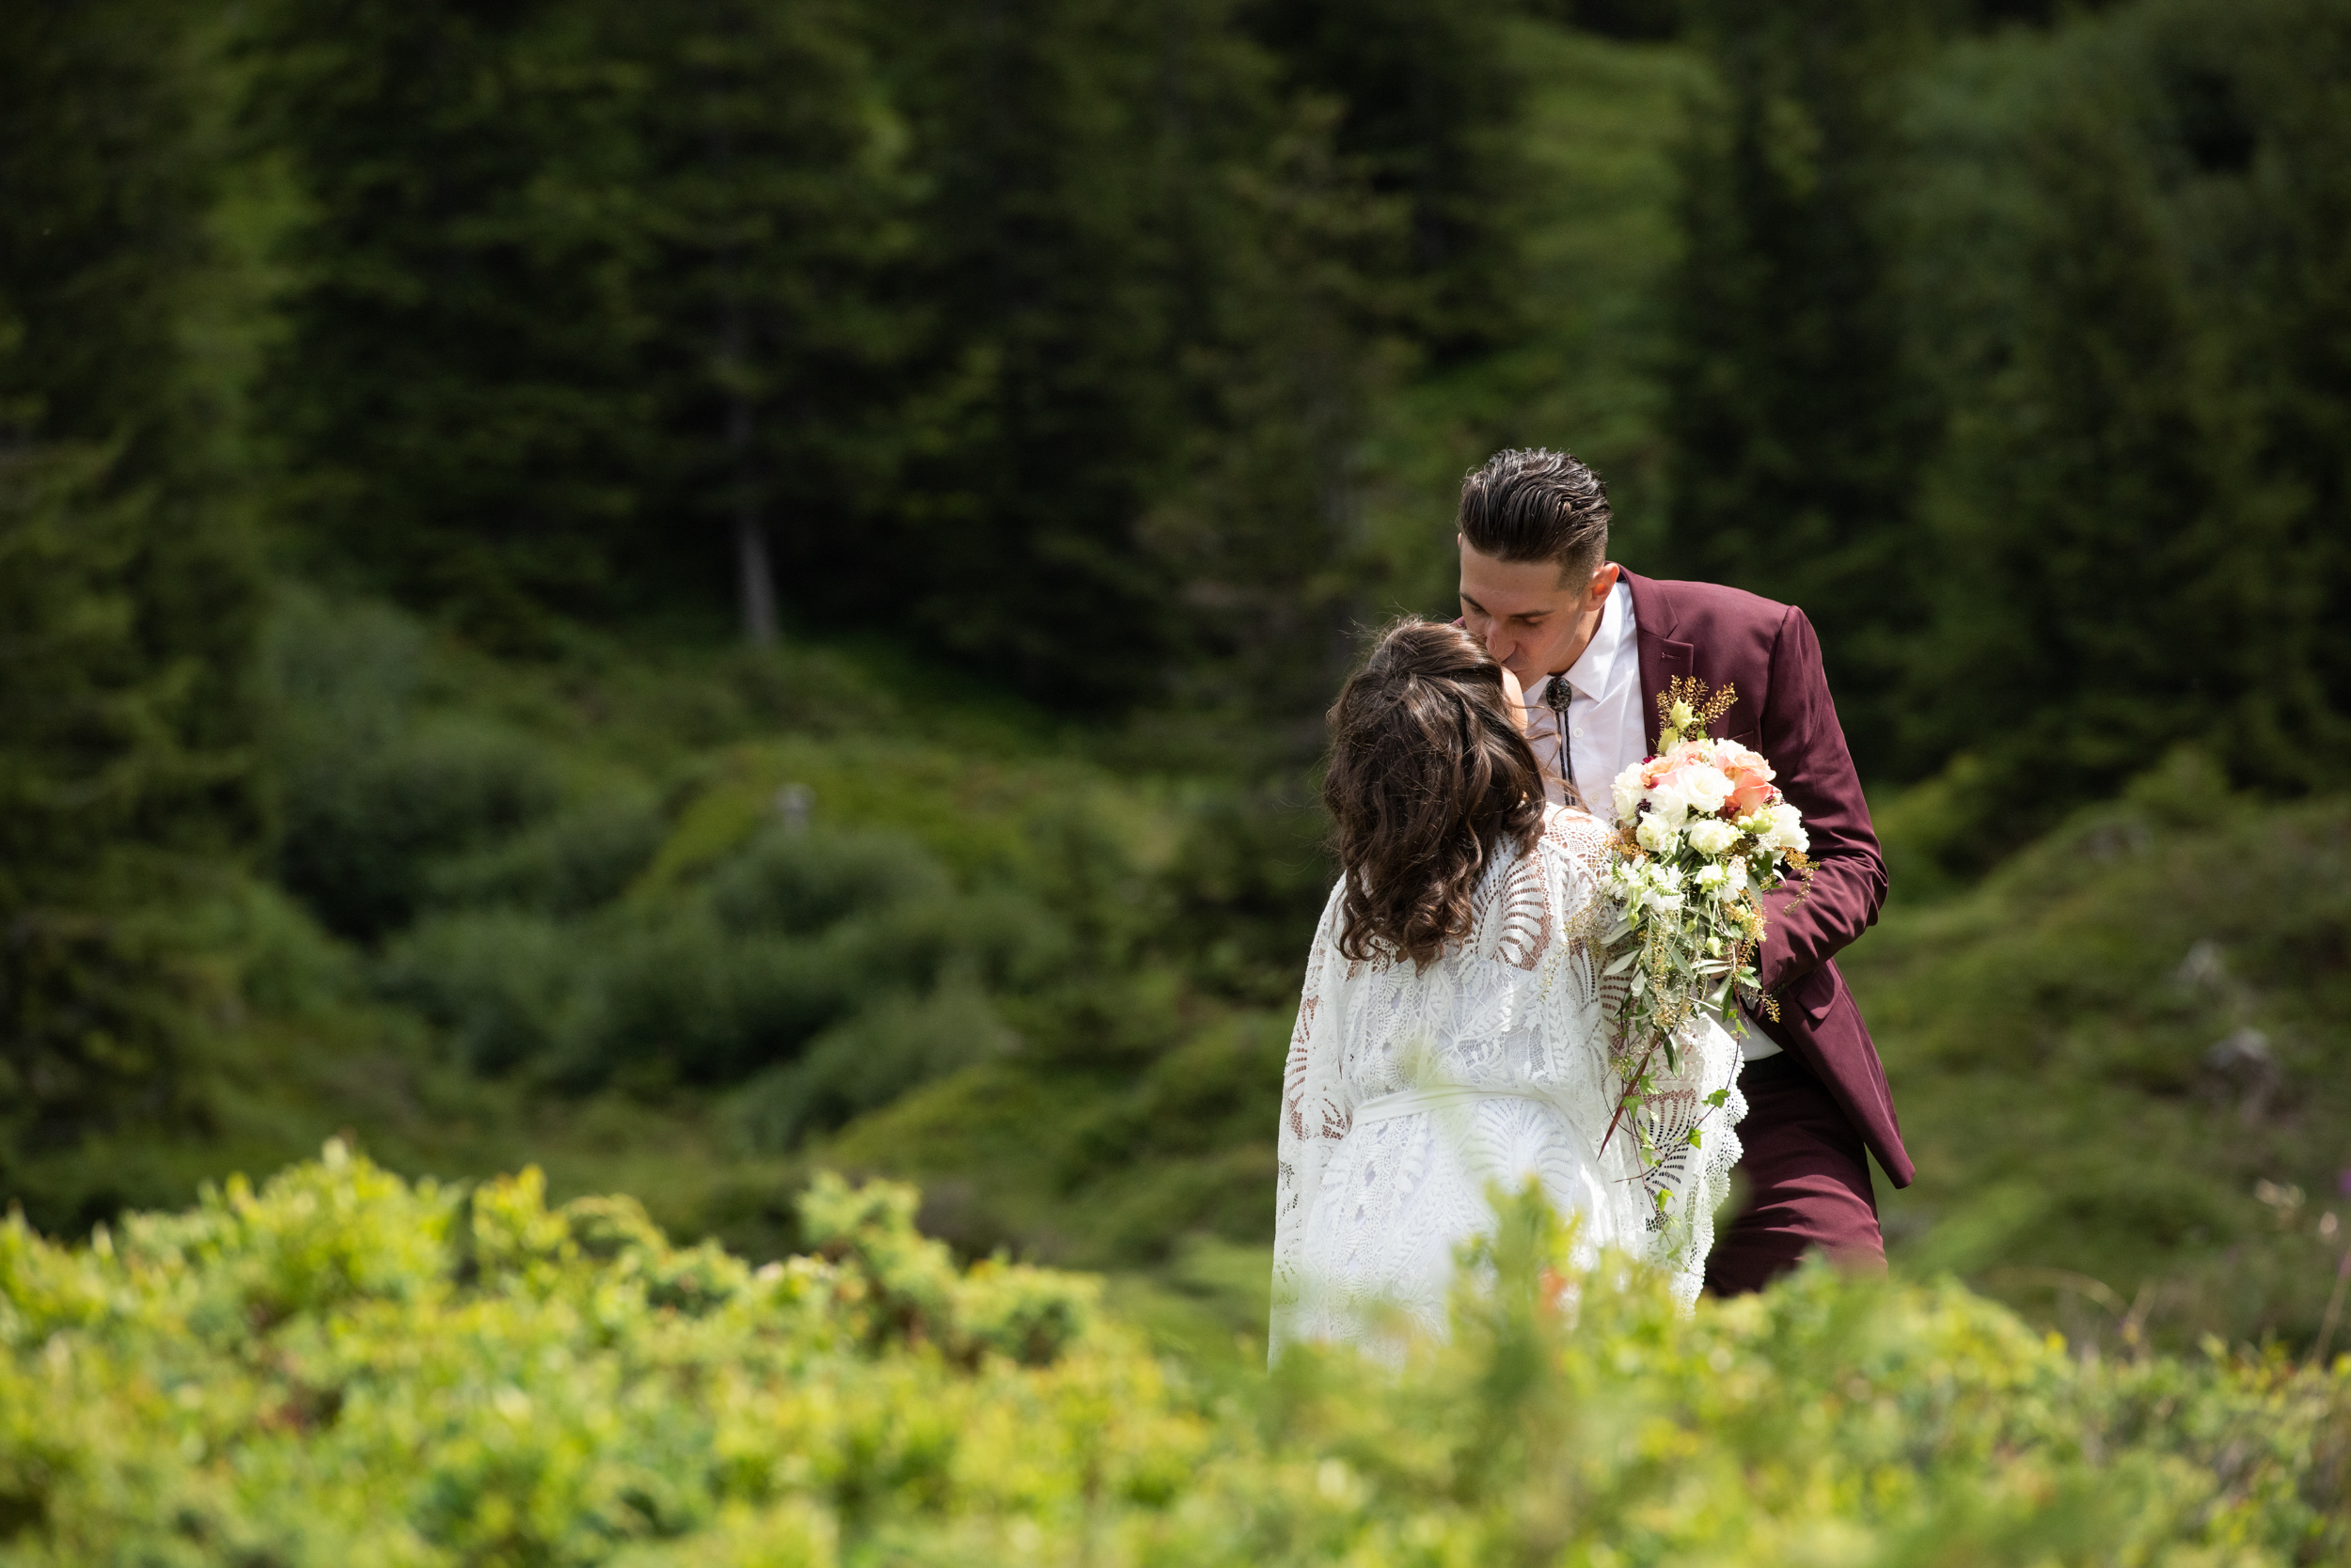 intimate location to elope in Switzerland